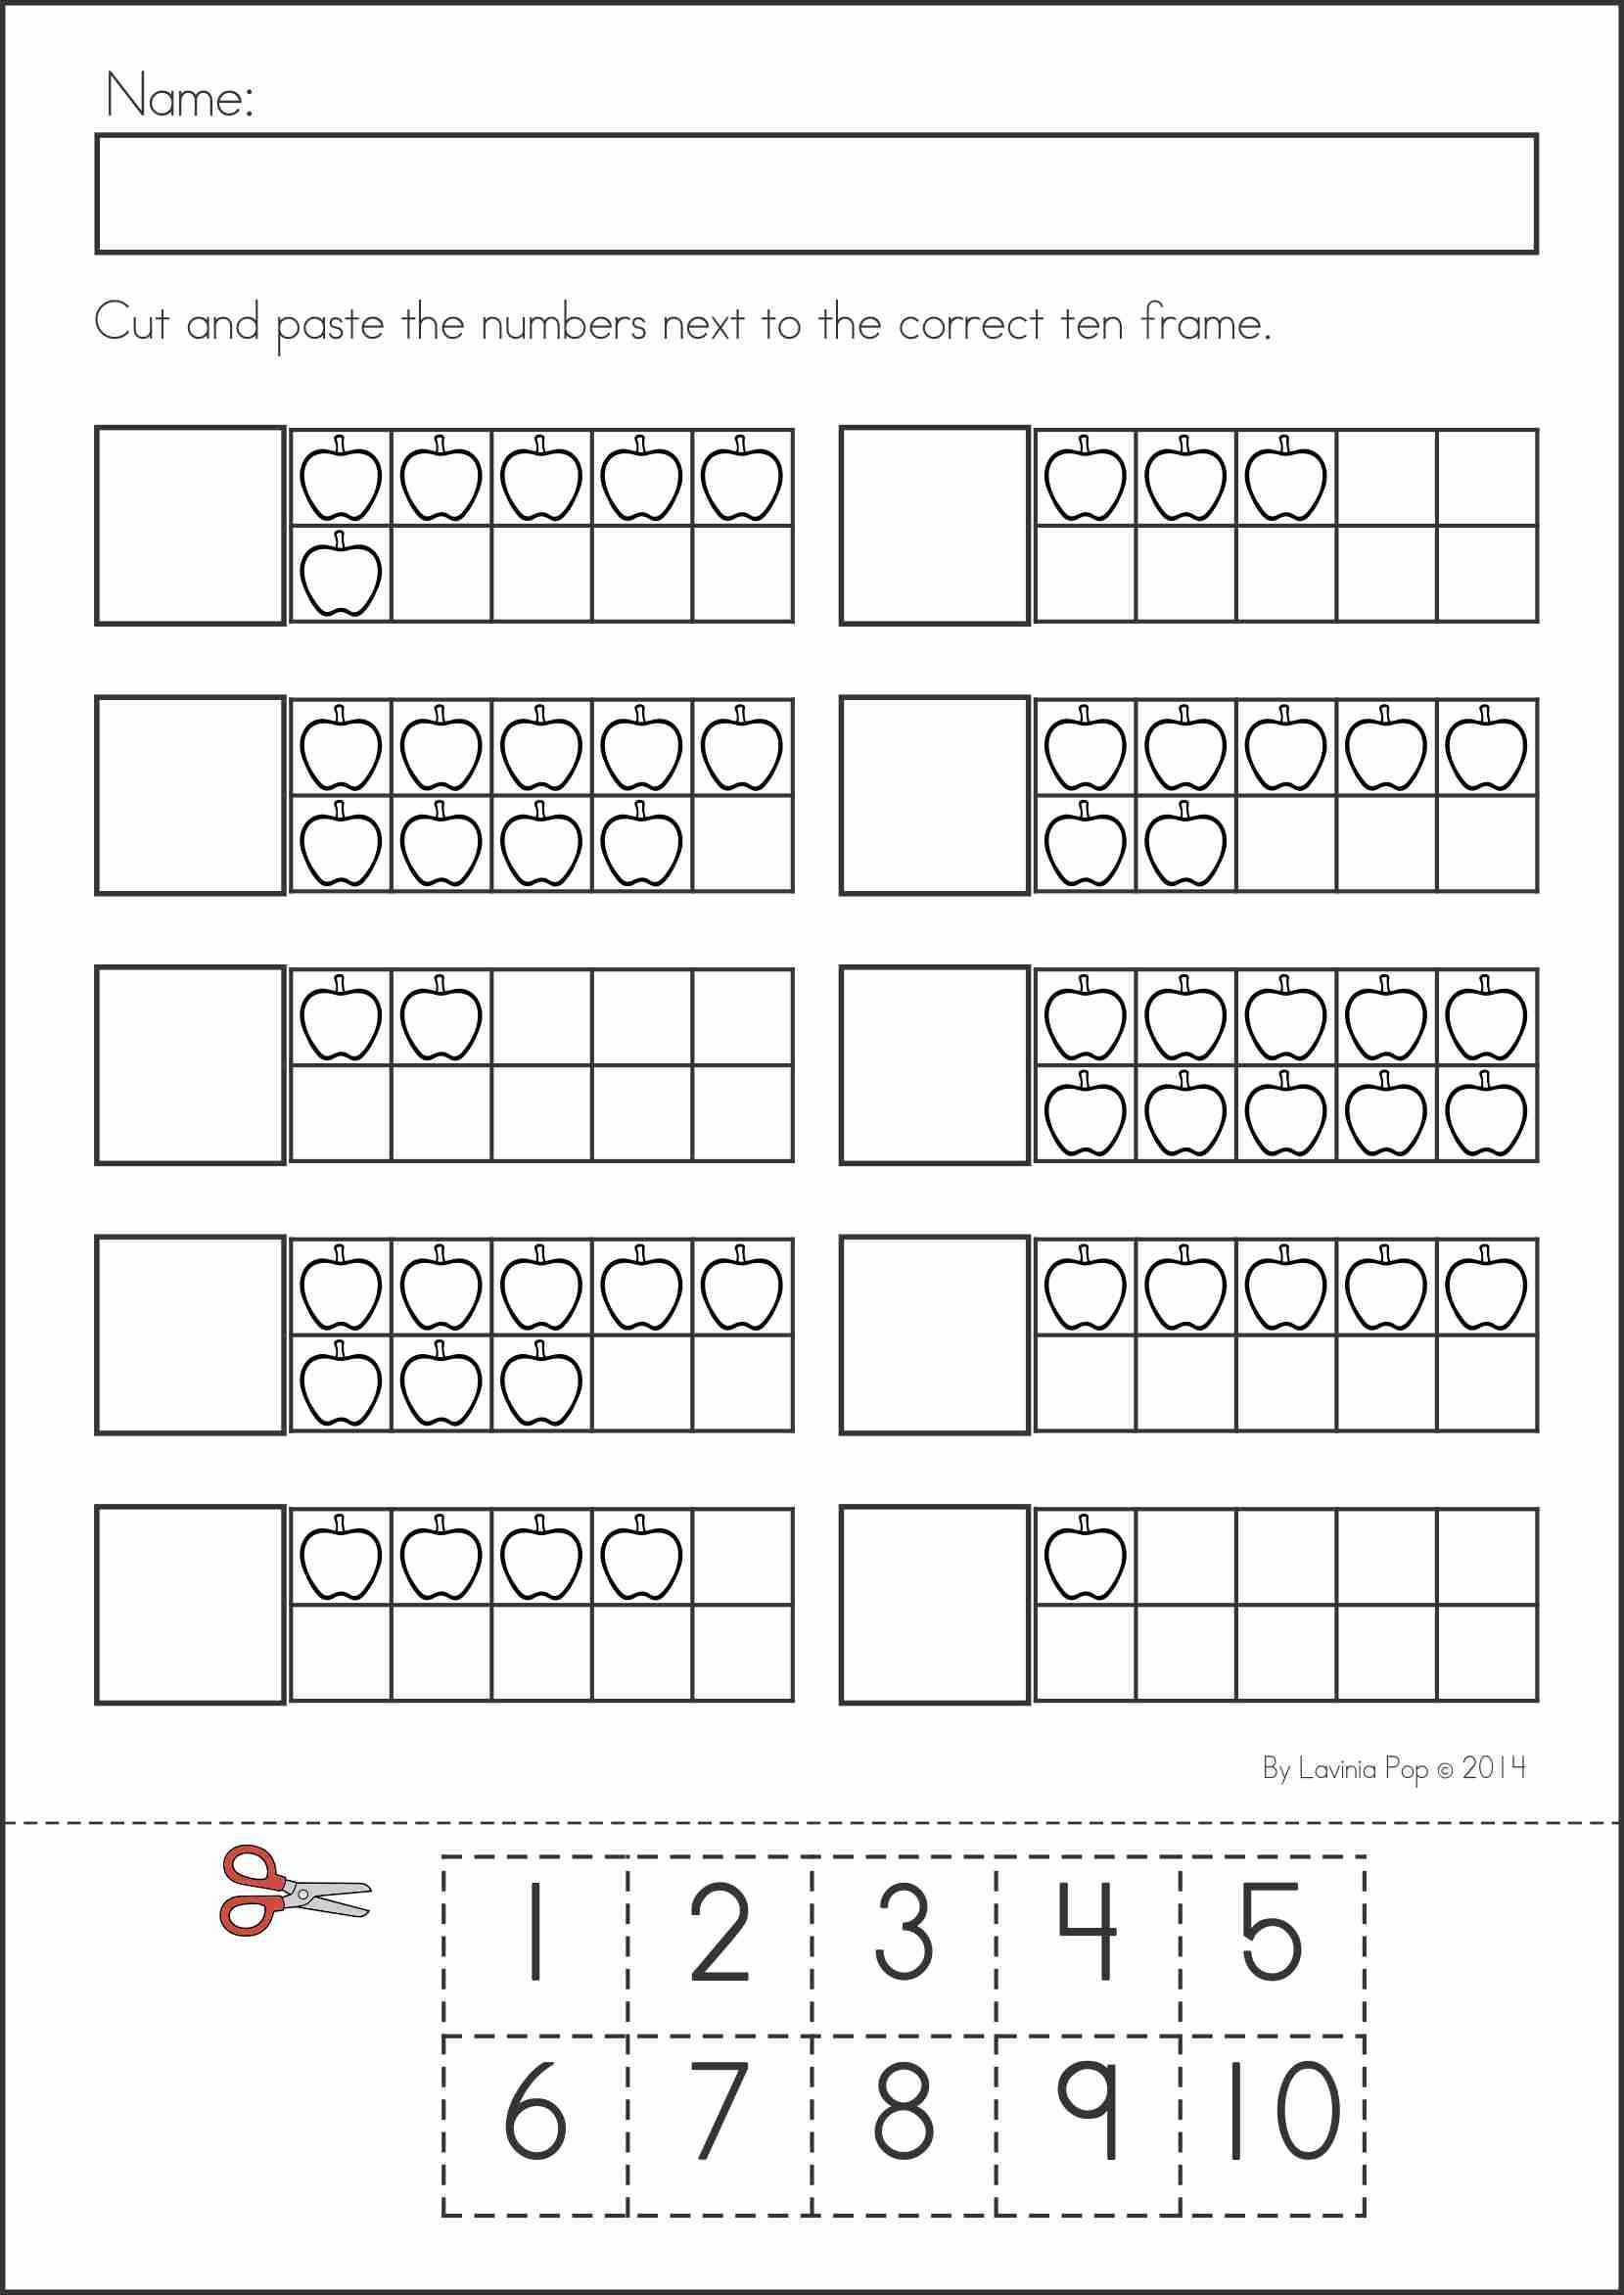 Radical Equations Dinosaur Worksheet Answers Along with Ten Frame Worksheets Choice Image Worksheet Math for Kids